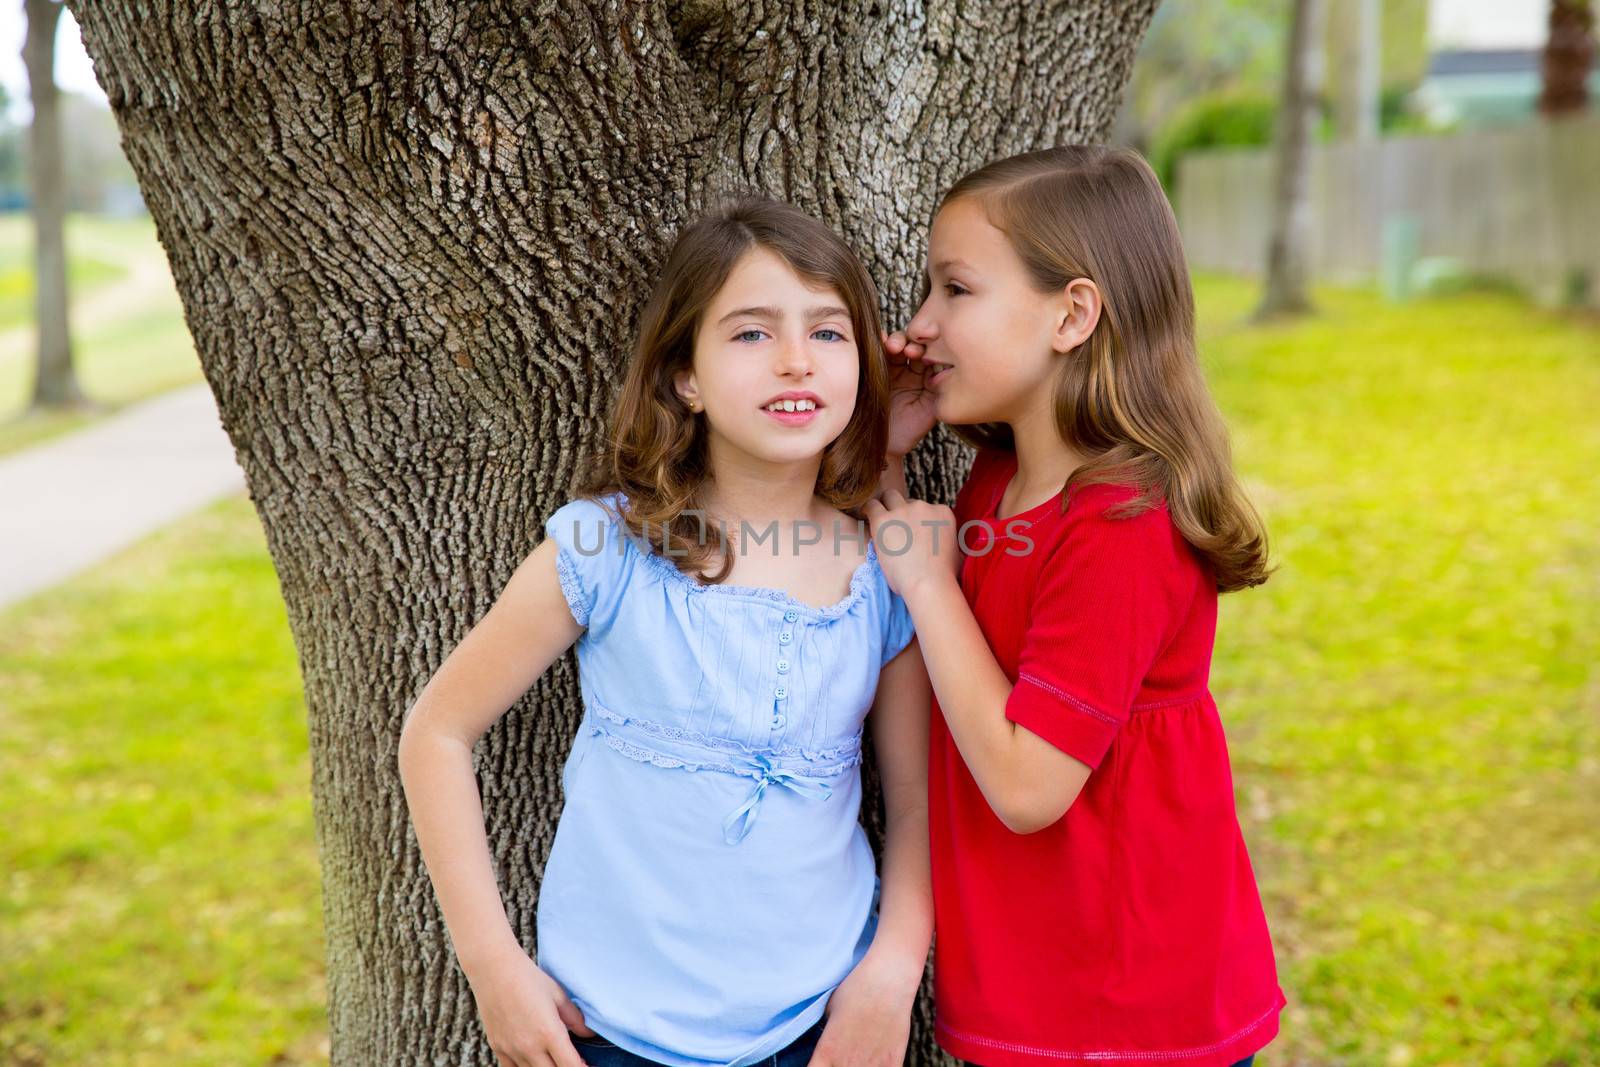 kid friend girls whispering ear playing in a park tree by lunamarina